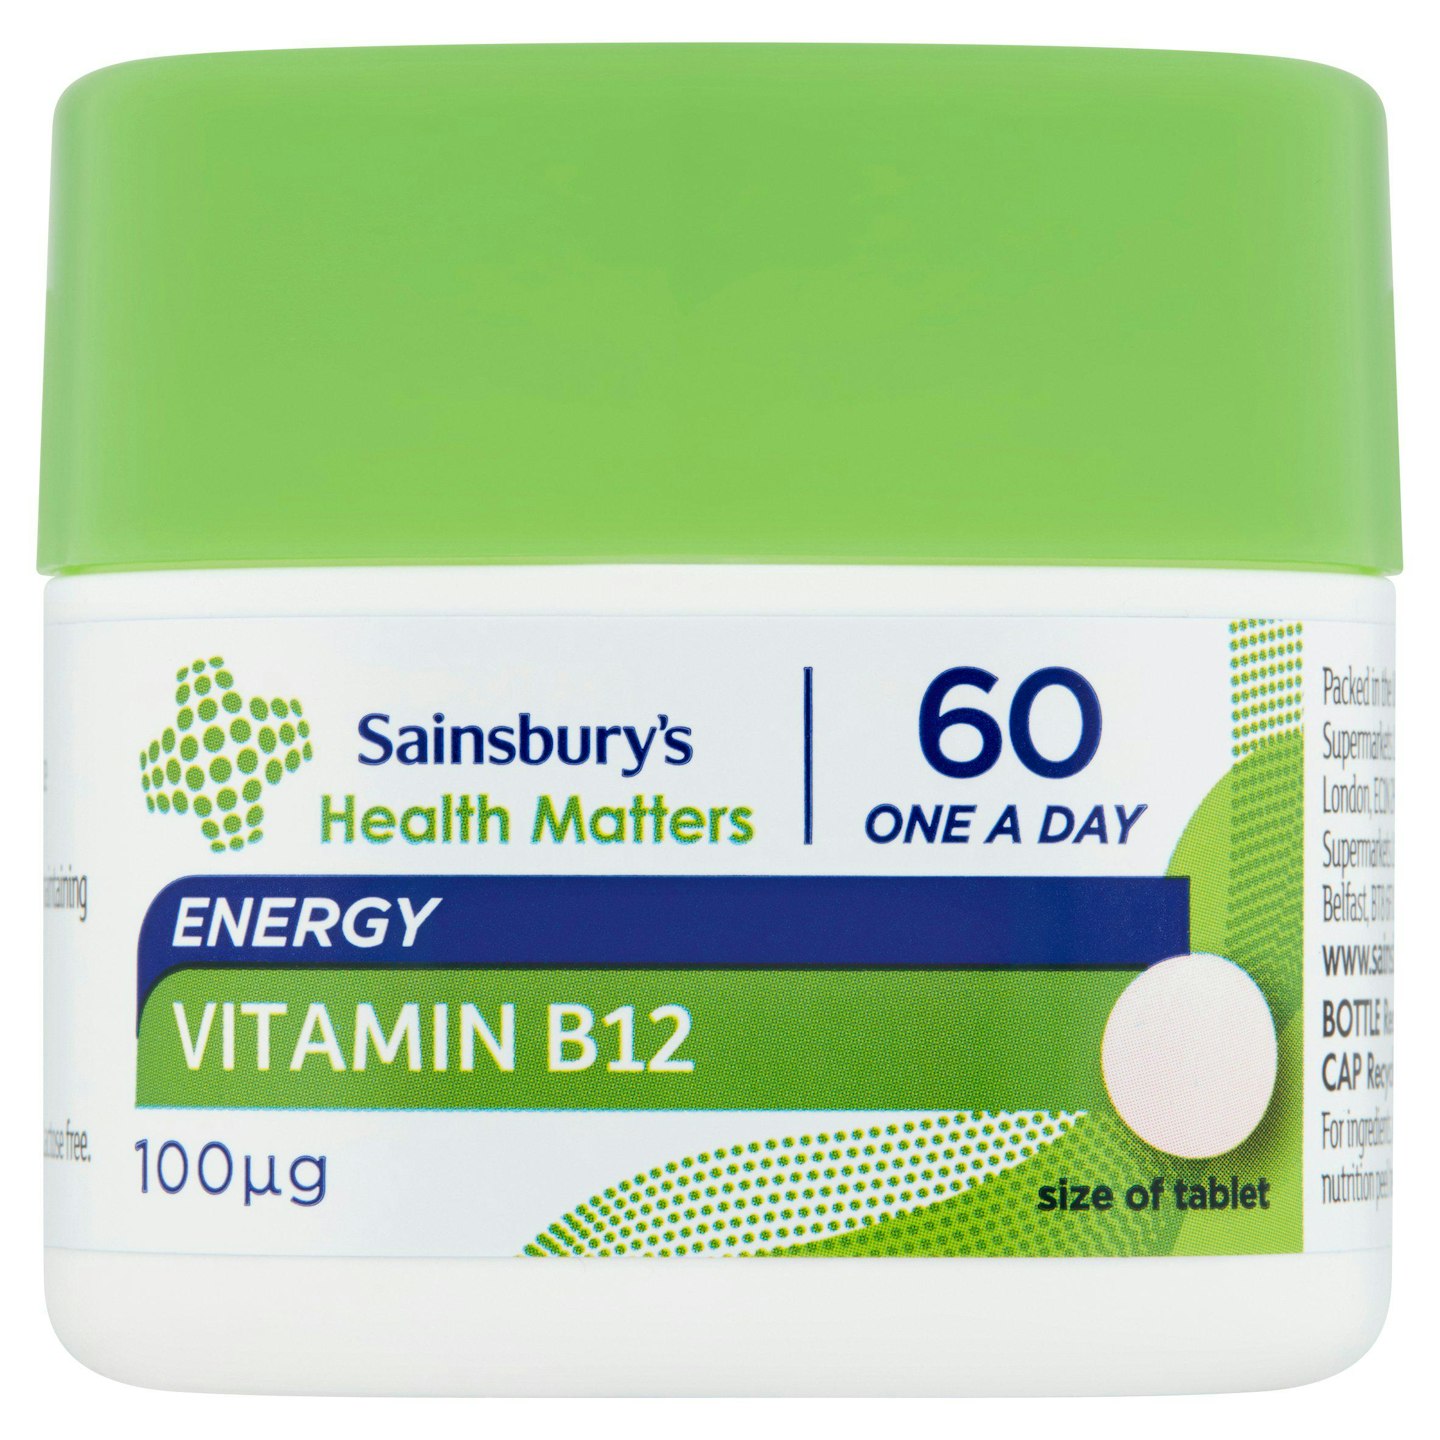 Sainsbury's Vitamin B12